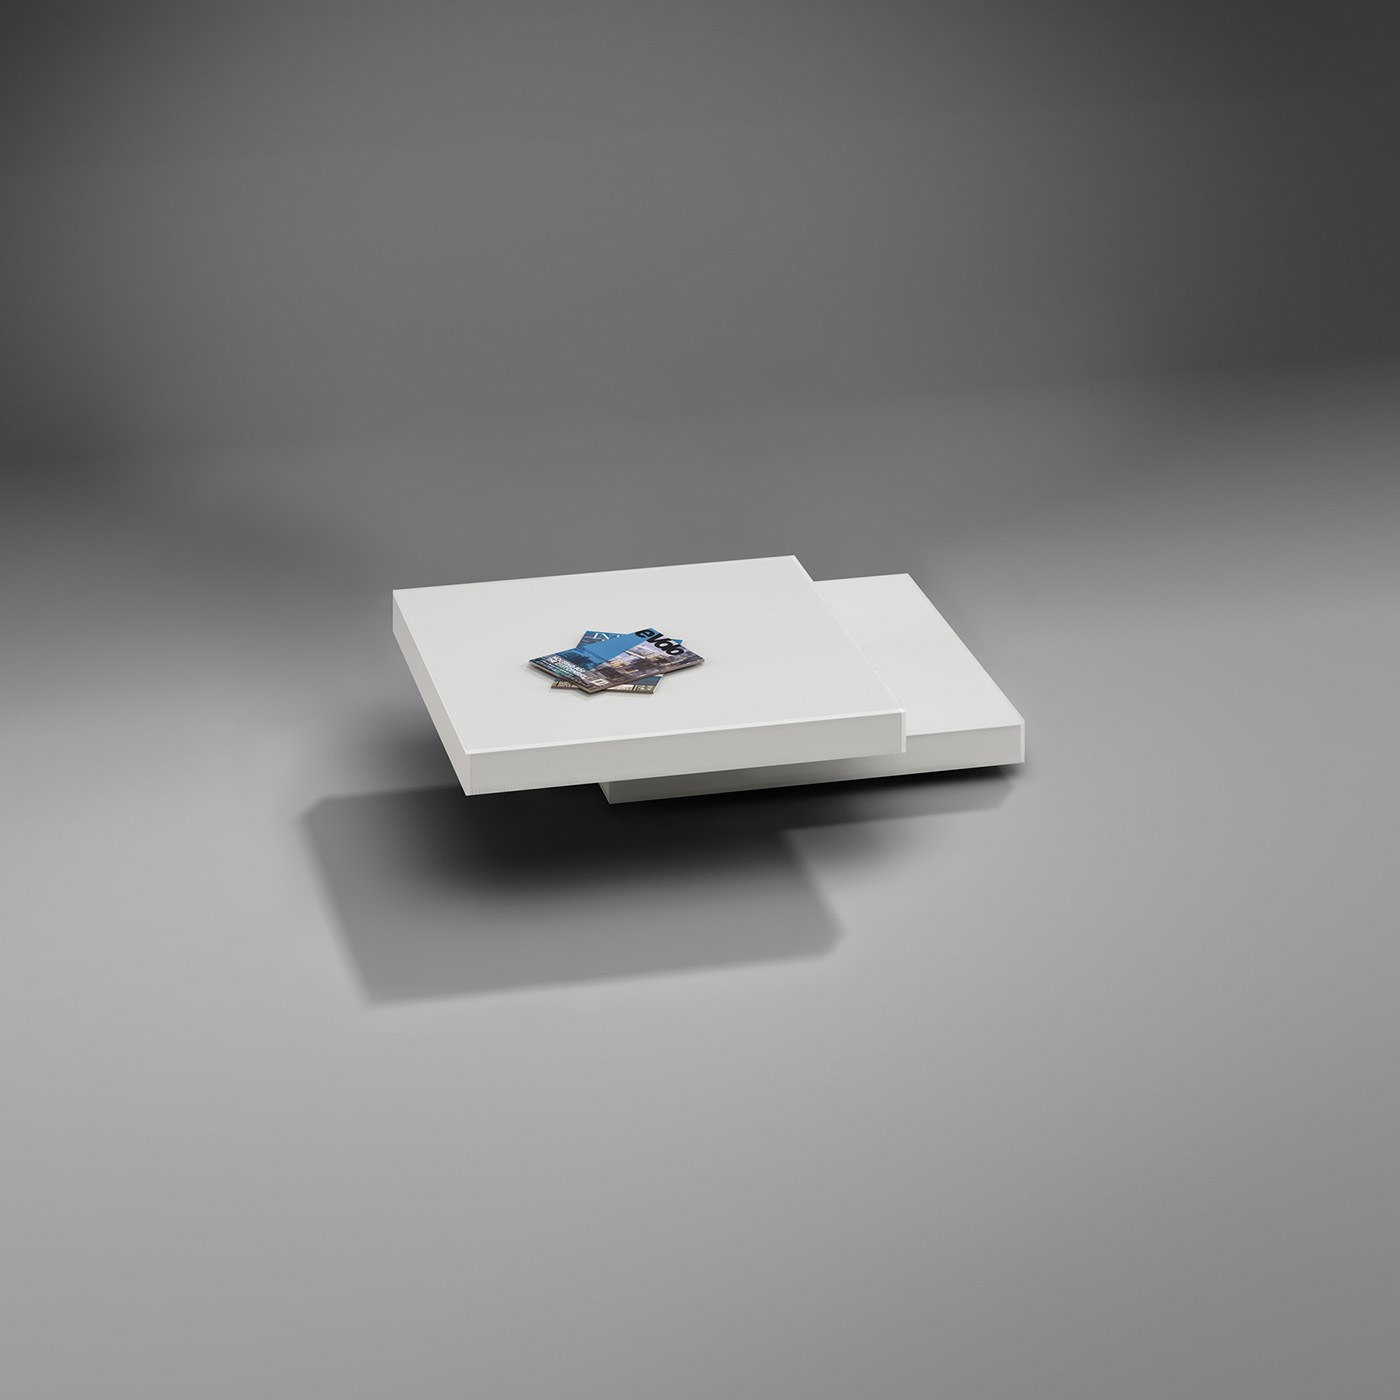 Turnable glass coffee table URANUS 100 by DREIECK DESIGN: OPTIWHITE velvetcolor - pure white